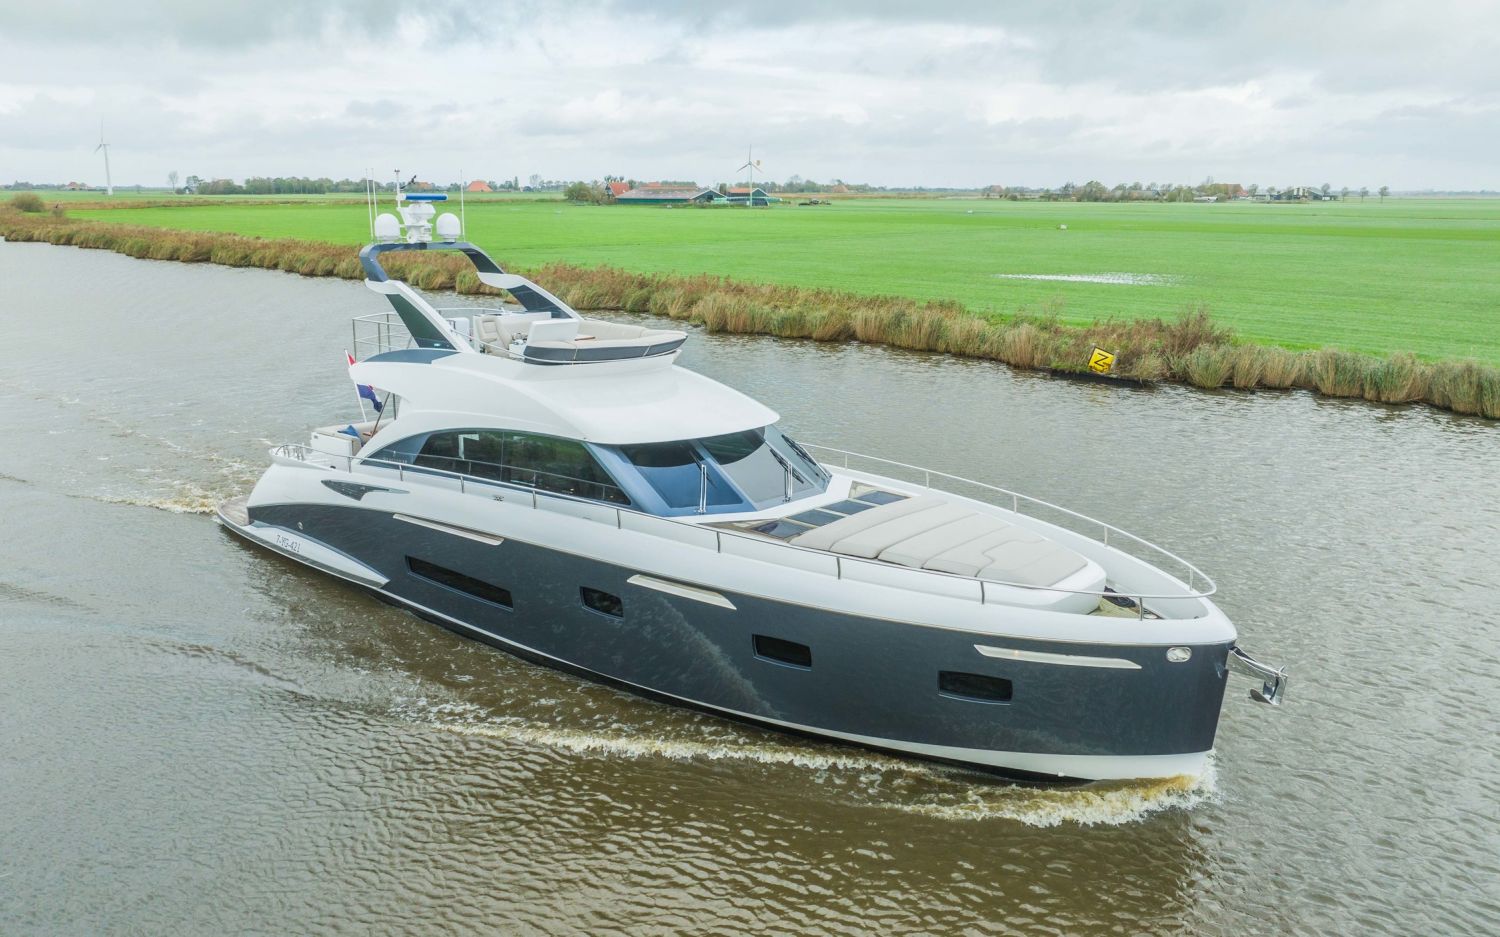 Sichterman Felicitatem, Superyacht Motor for sale by HollandBoat International Yachtbrokers